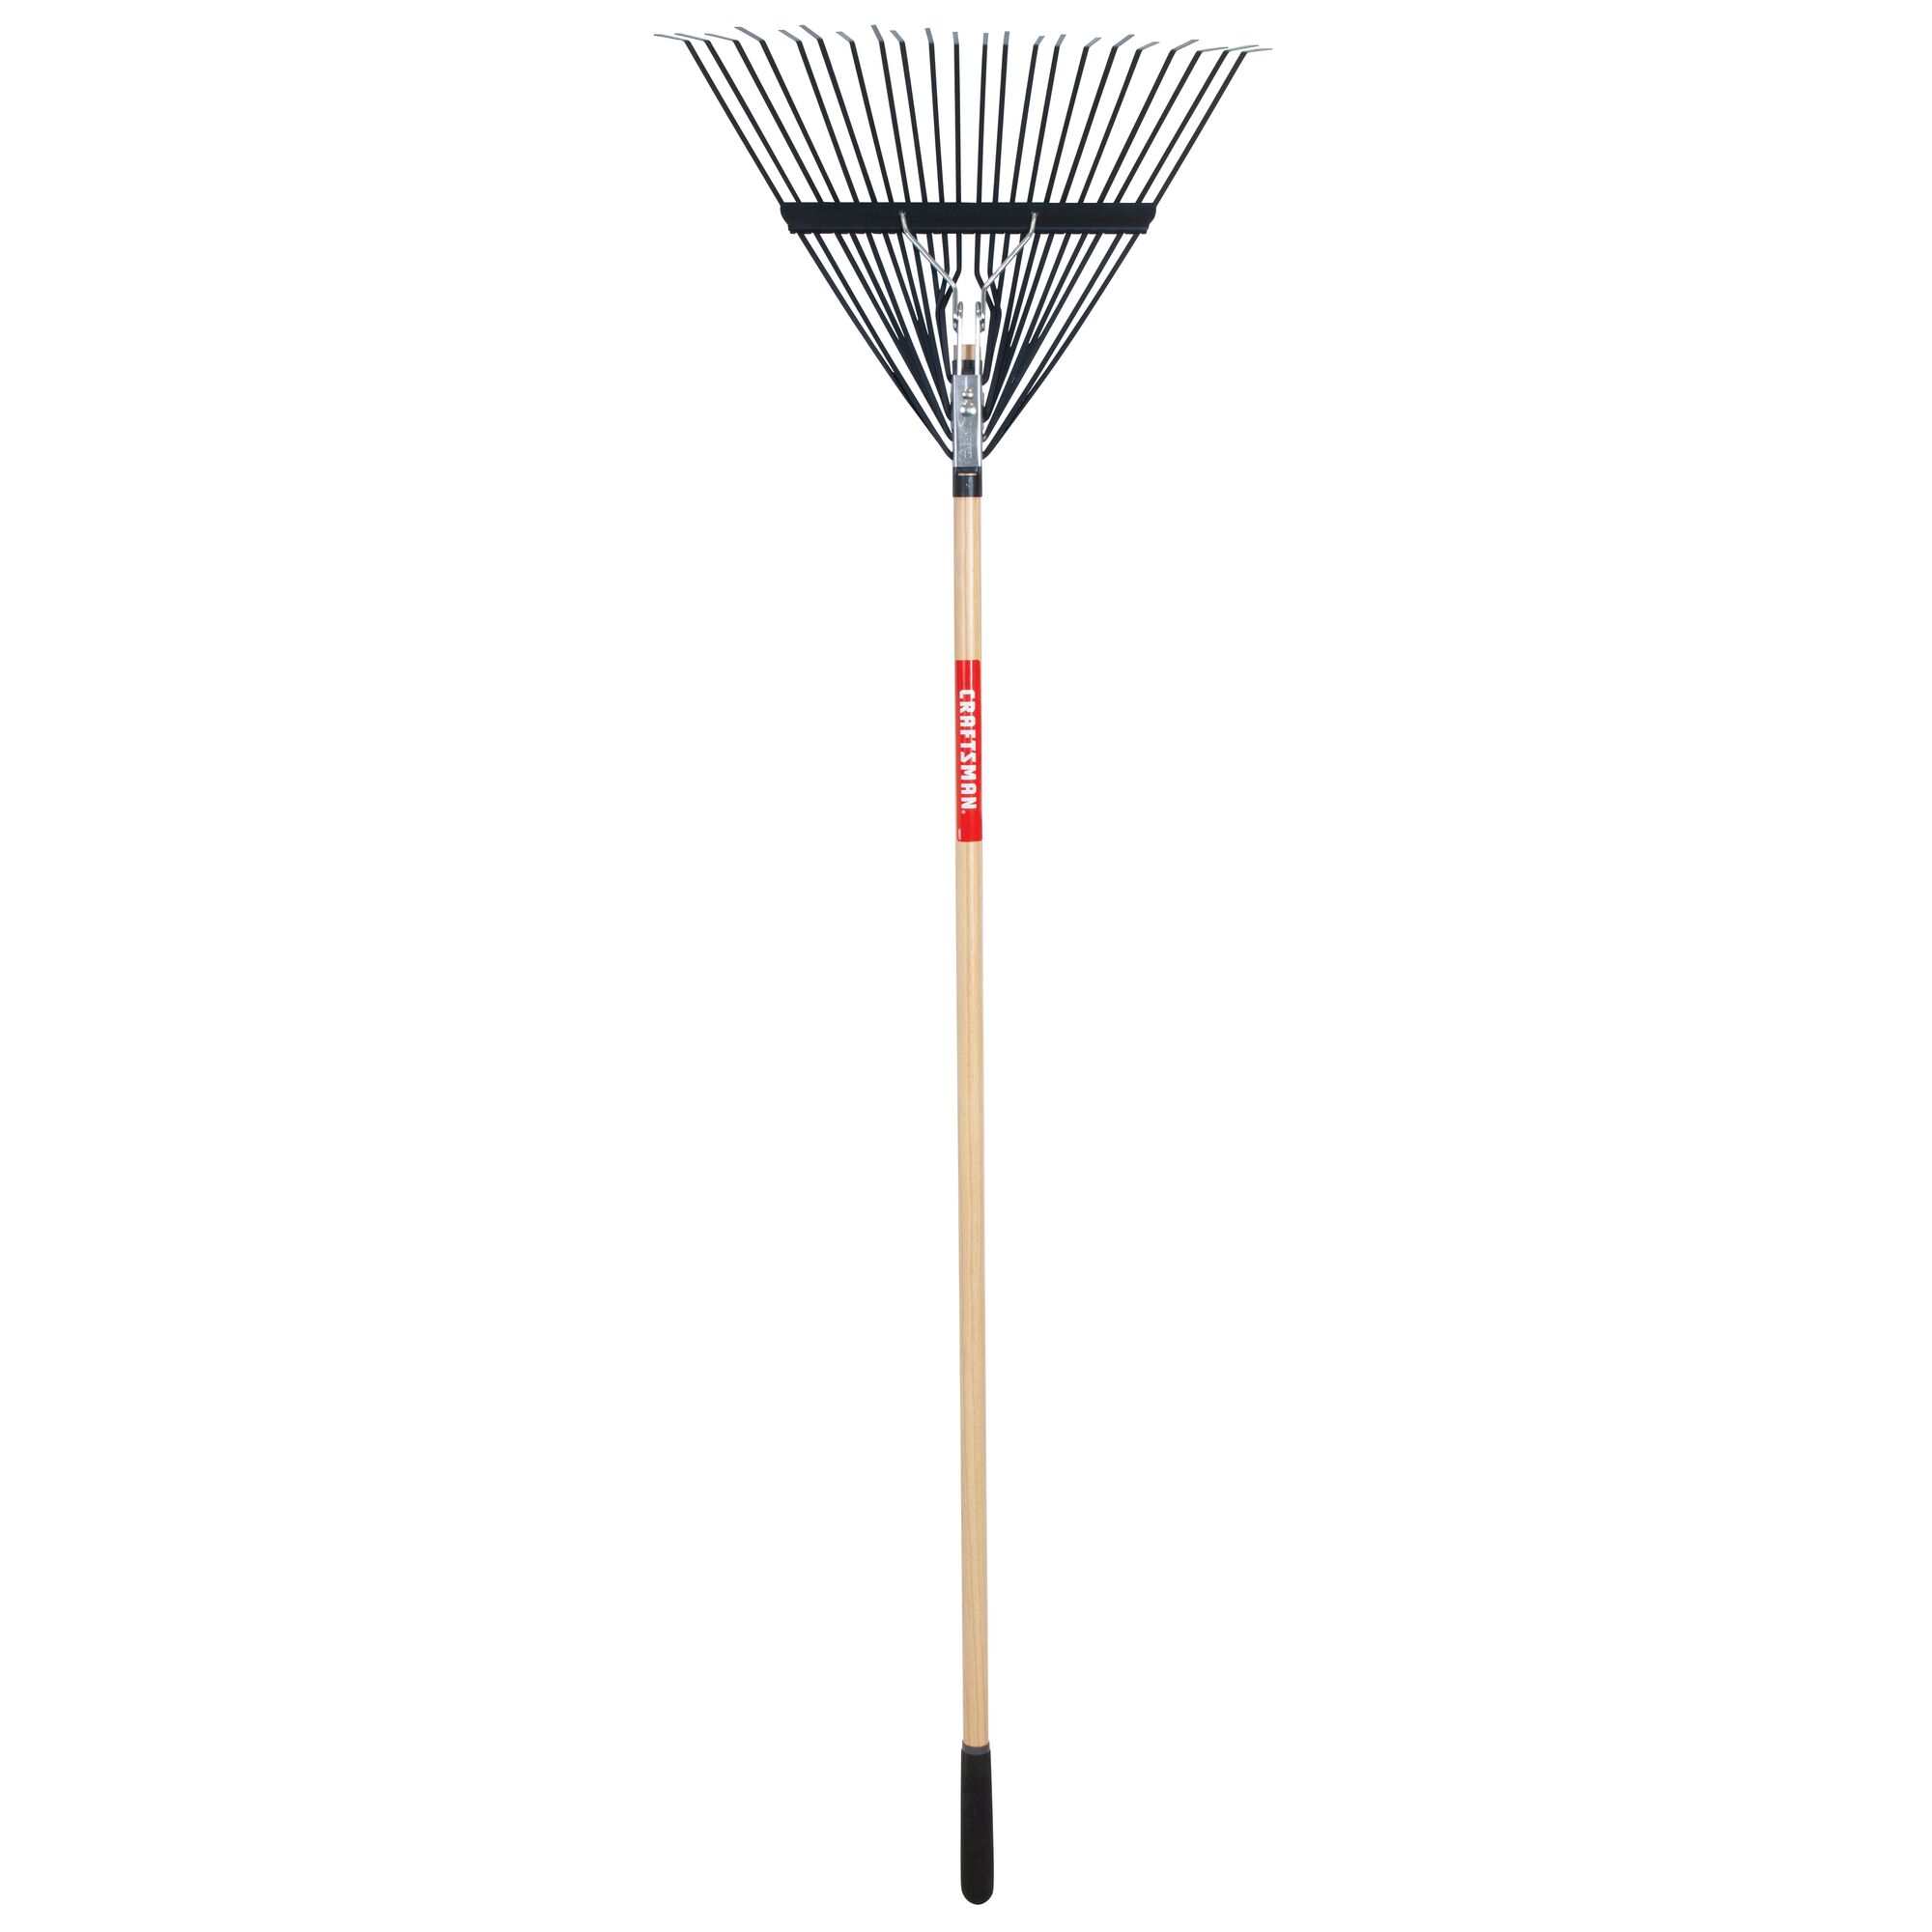 Profile of 22 inch tine wood handle lawn rake.